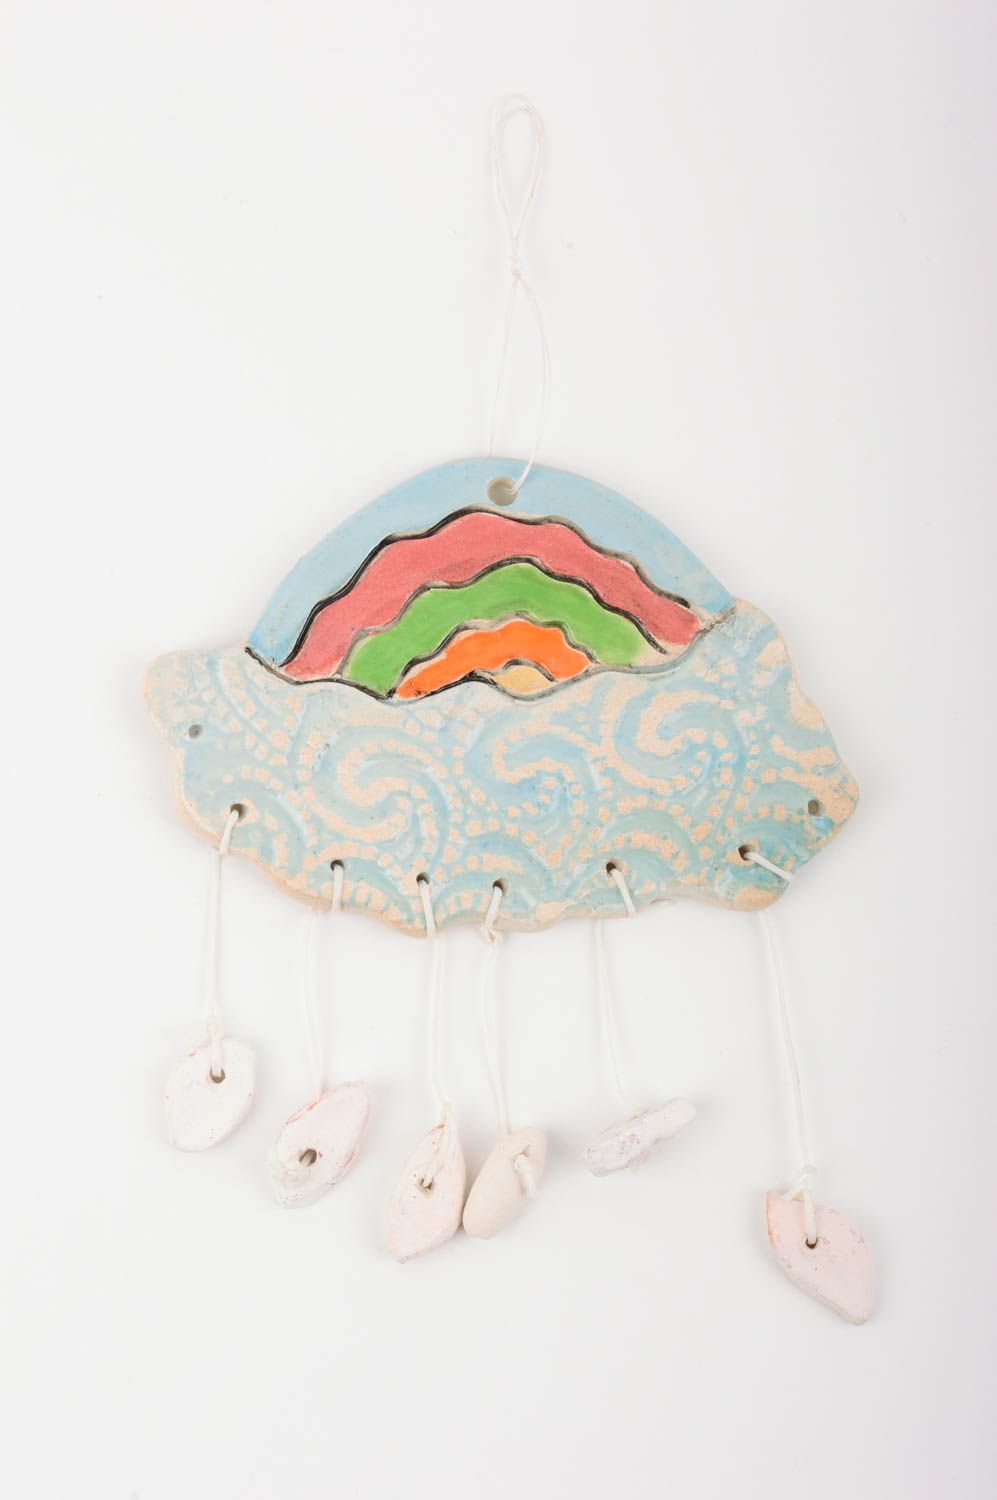 Handmade Keramik Wandbild Deko zum Aufhängen Wanddeko Kinderzimmer Regenbogen foto 1